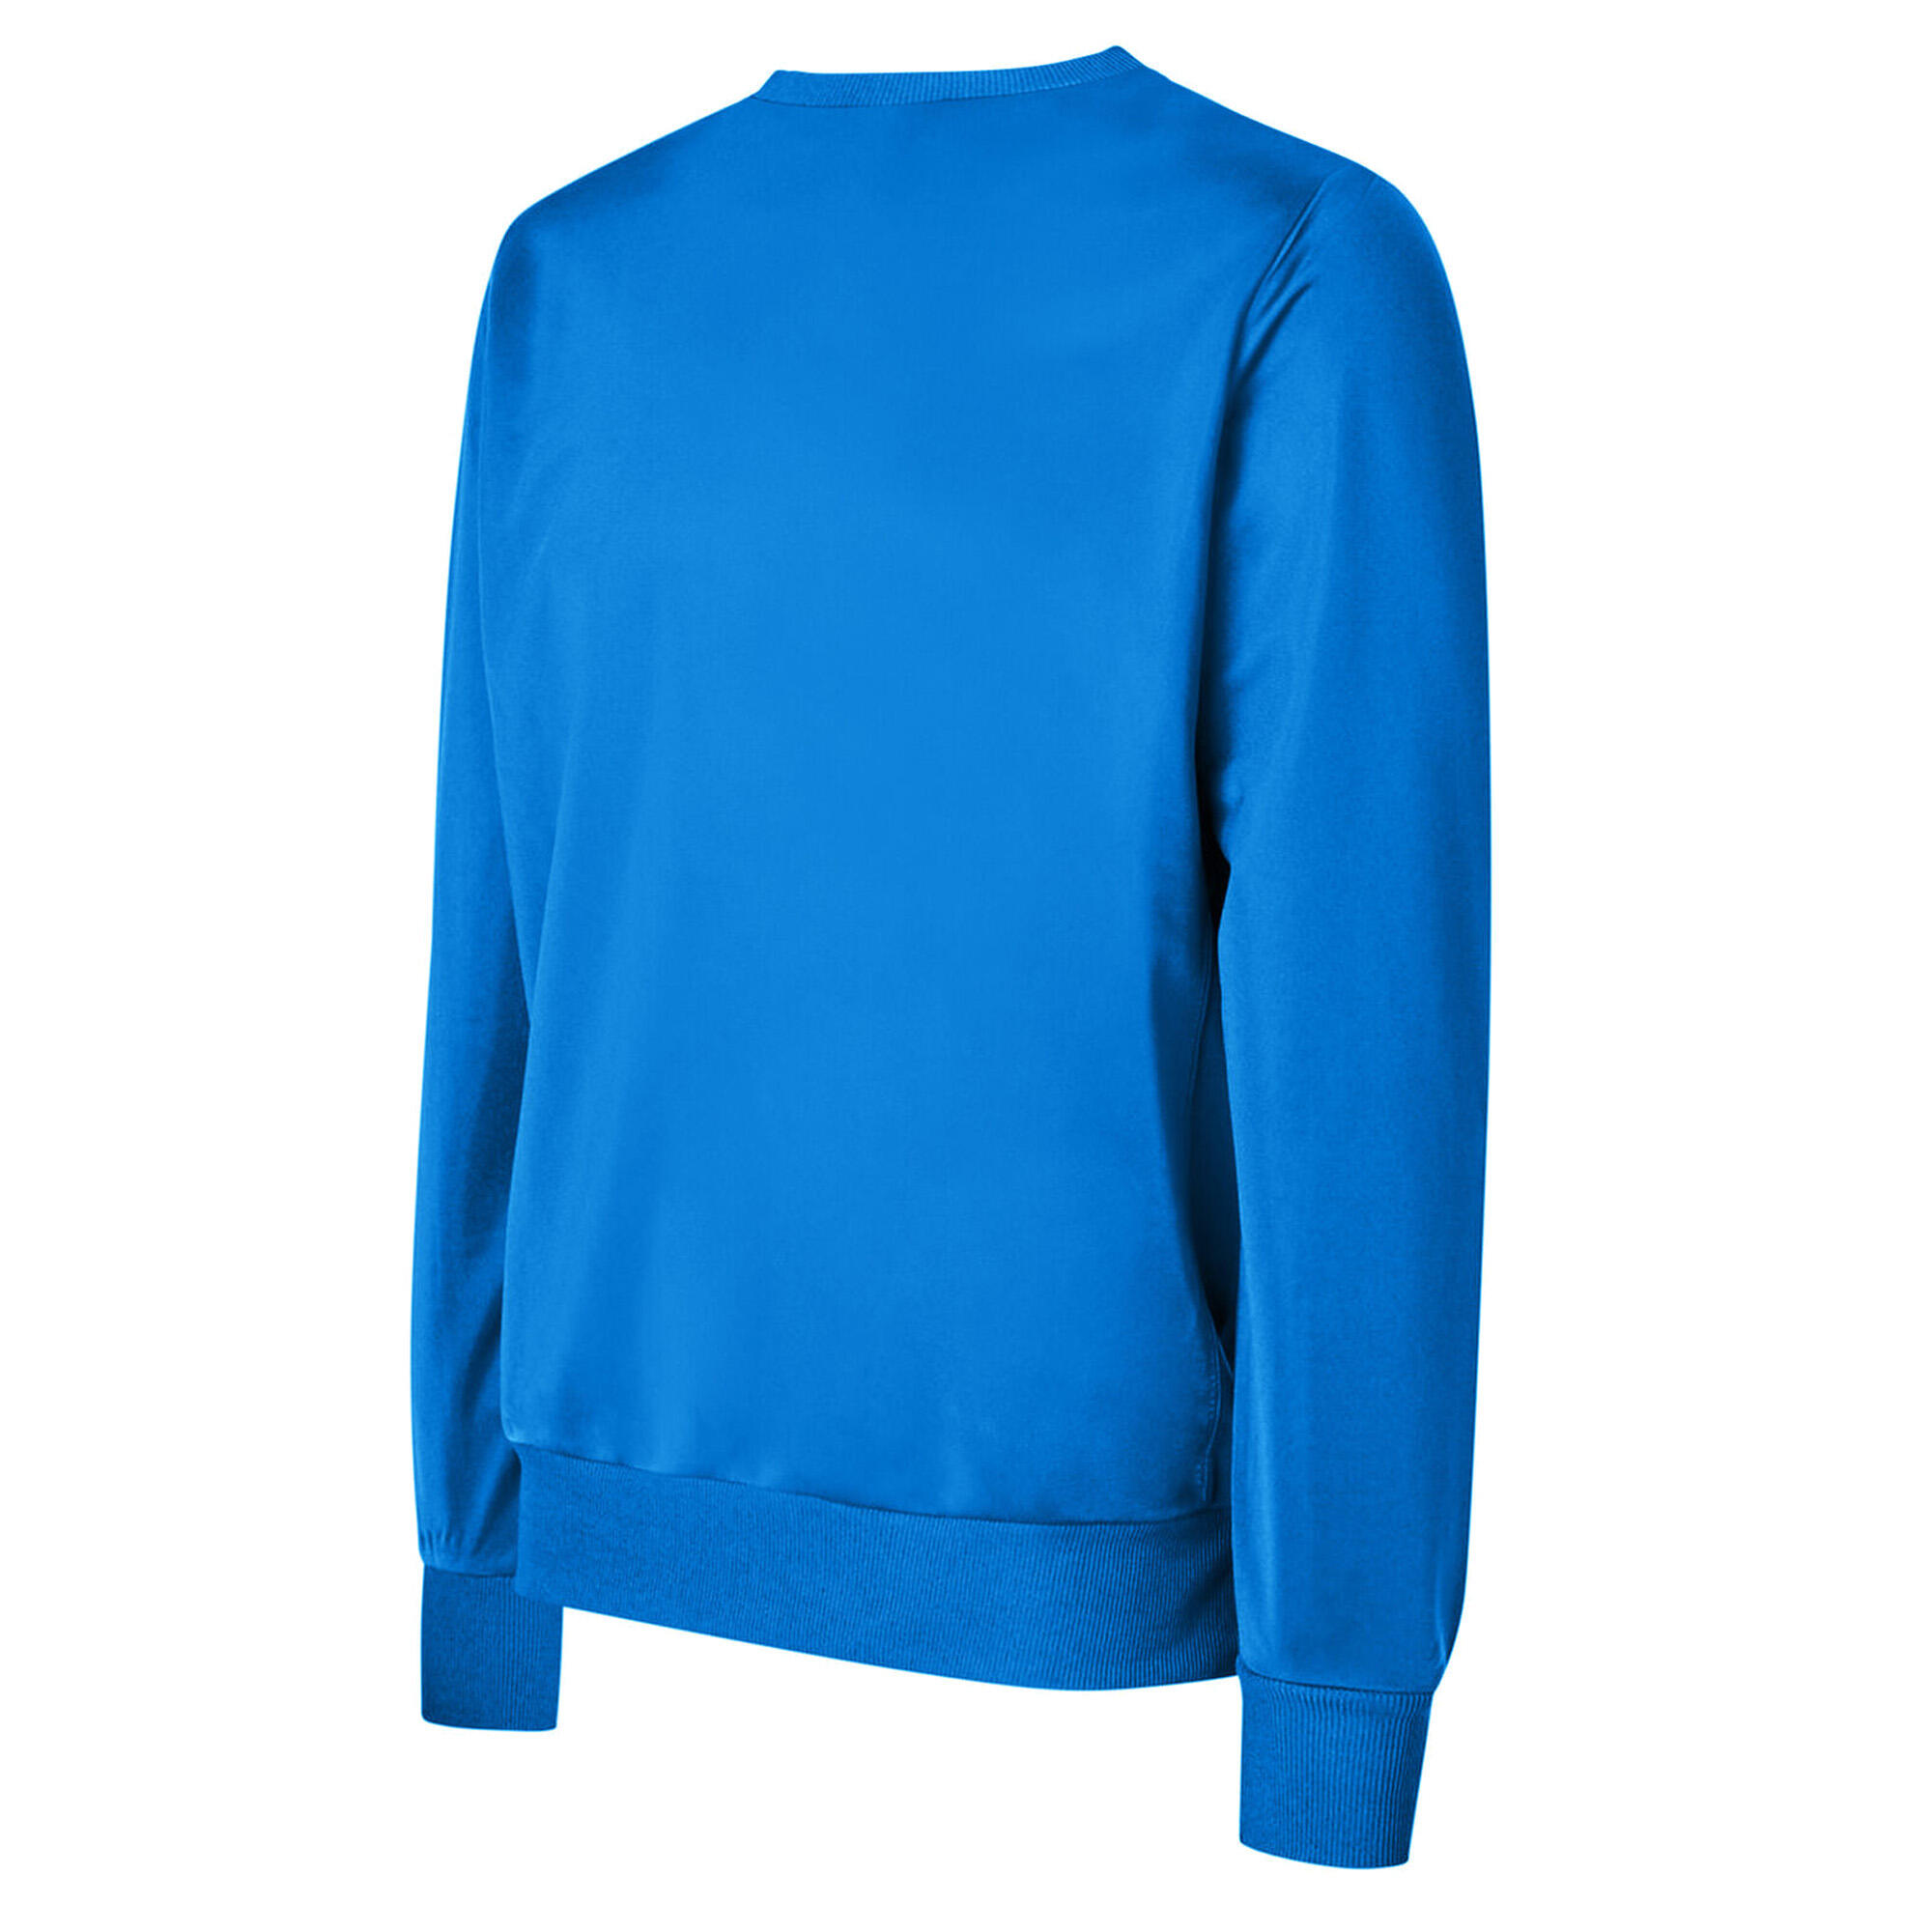 Childrens/Kids Polyester Sweatshirt (Royal Blue) 2/3